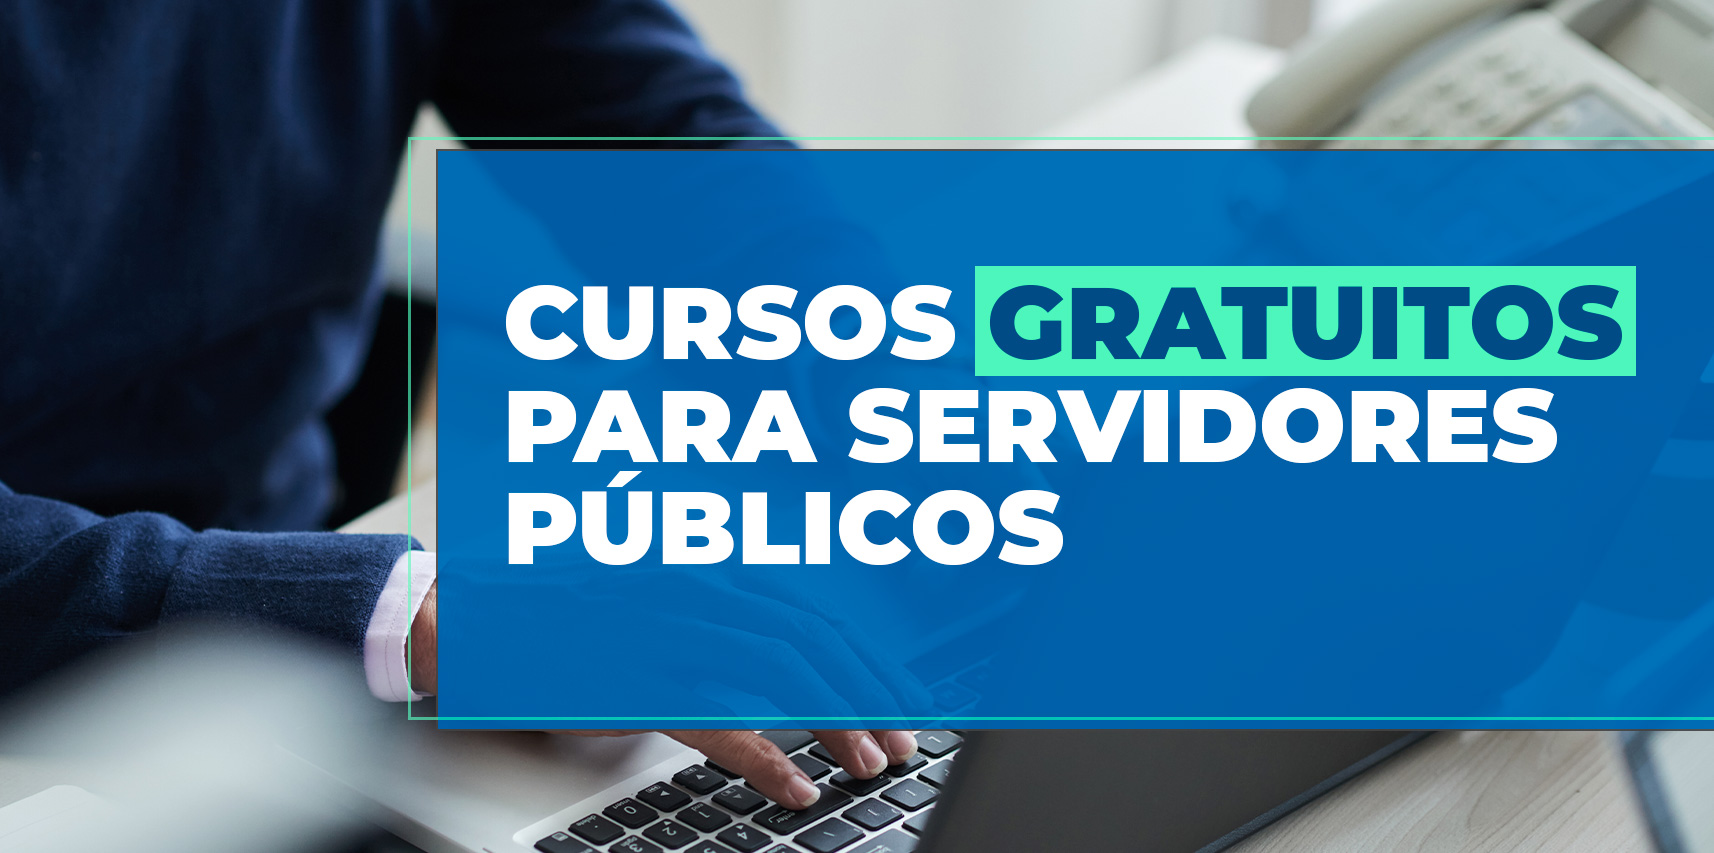 Prefeitura de Vargem Alta disponibiliza cursos gratuitos para servidores públicos